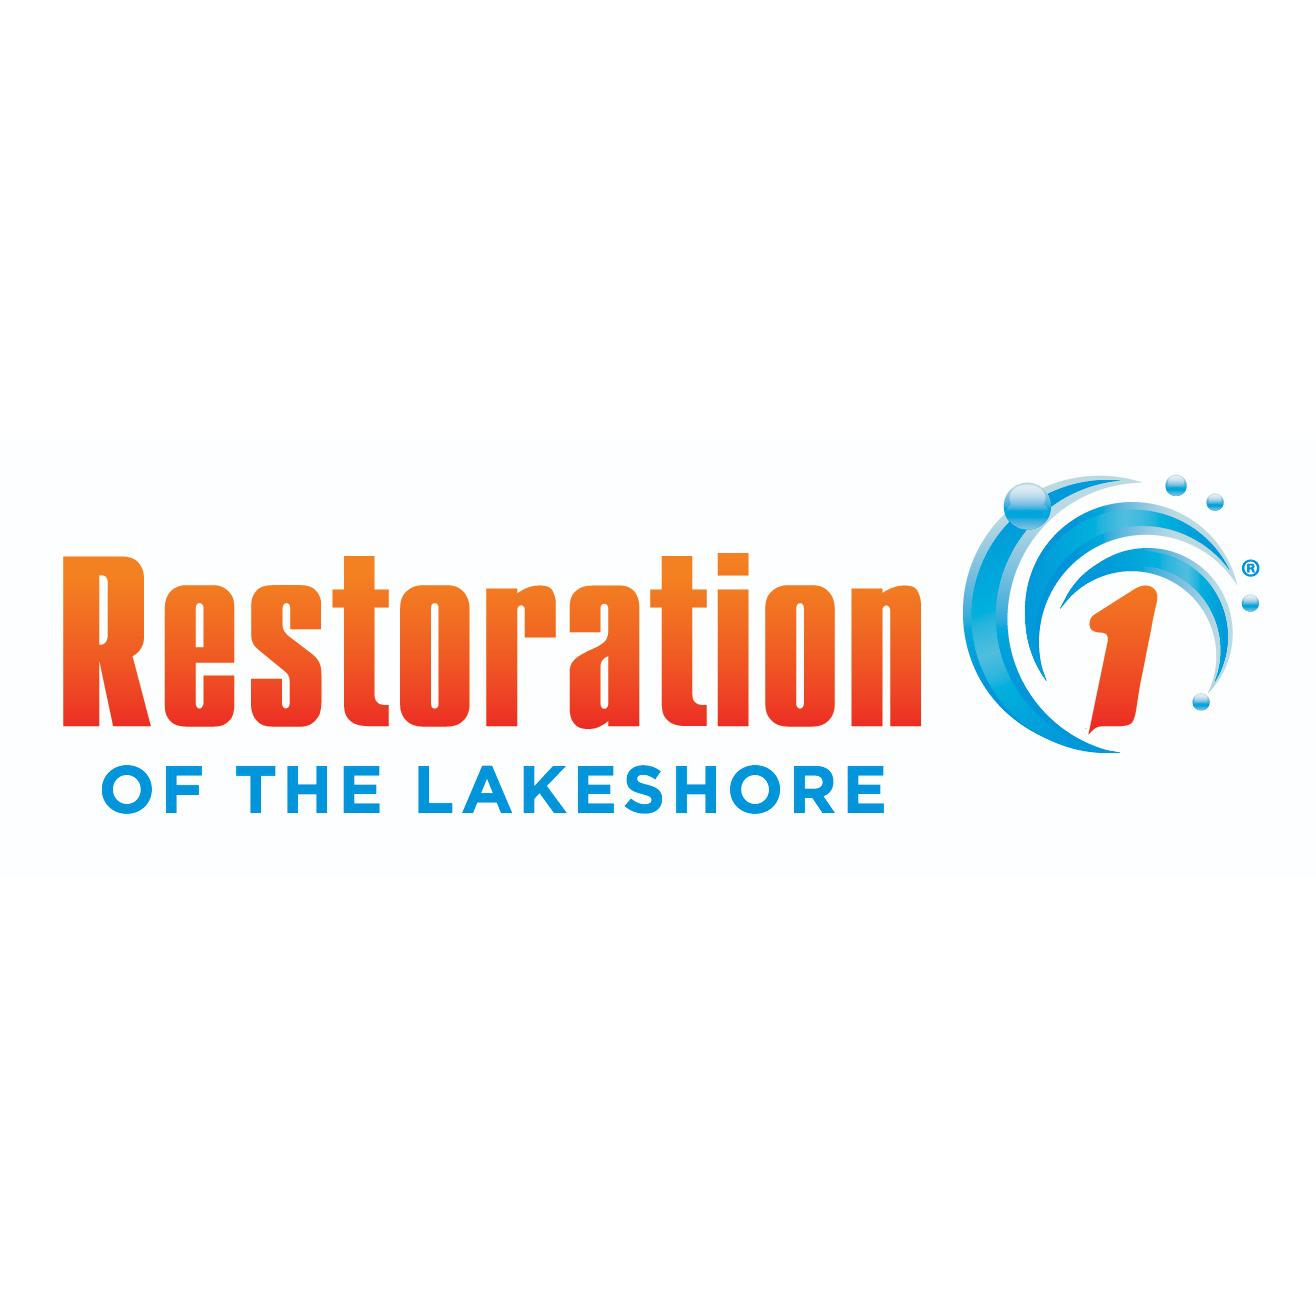 Restoration 1 of The Lakeshore - Zeeland, MI - (616)522-3433 | ShowMeLocal.com